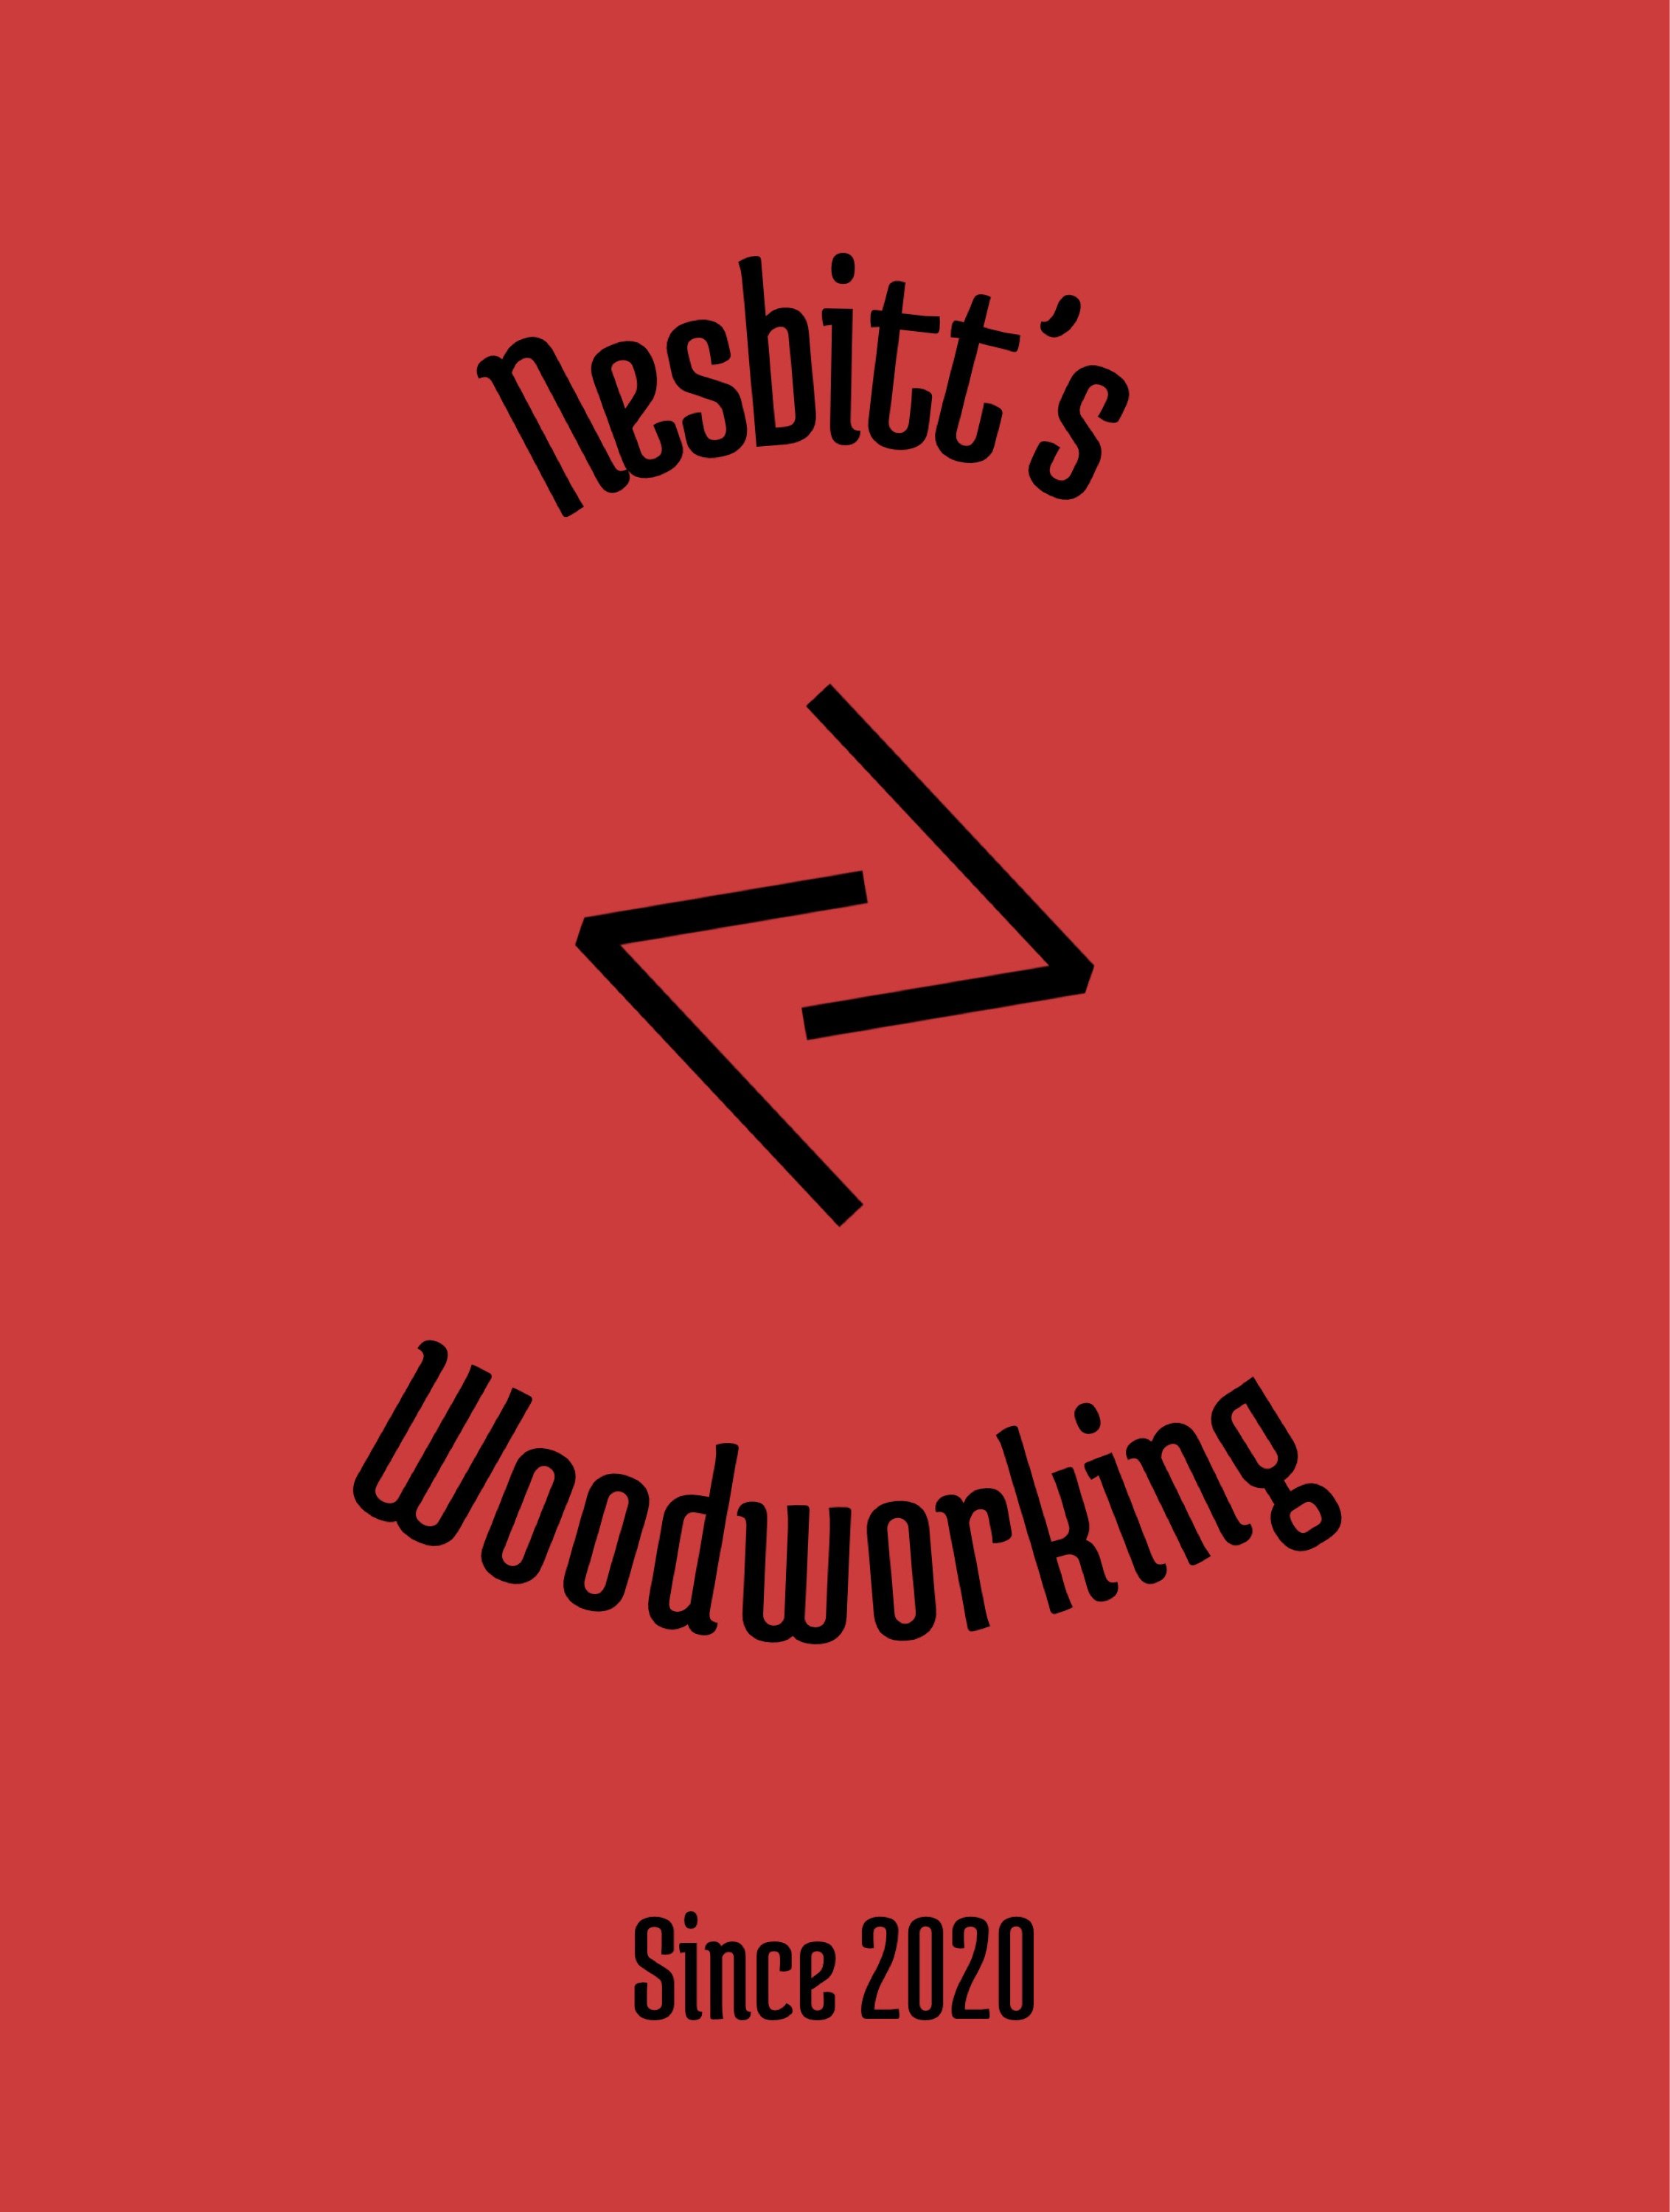 Nesbitt's Wood Working Logo